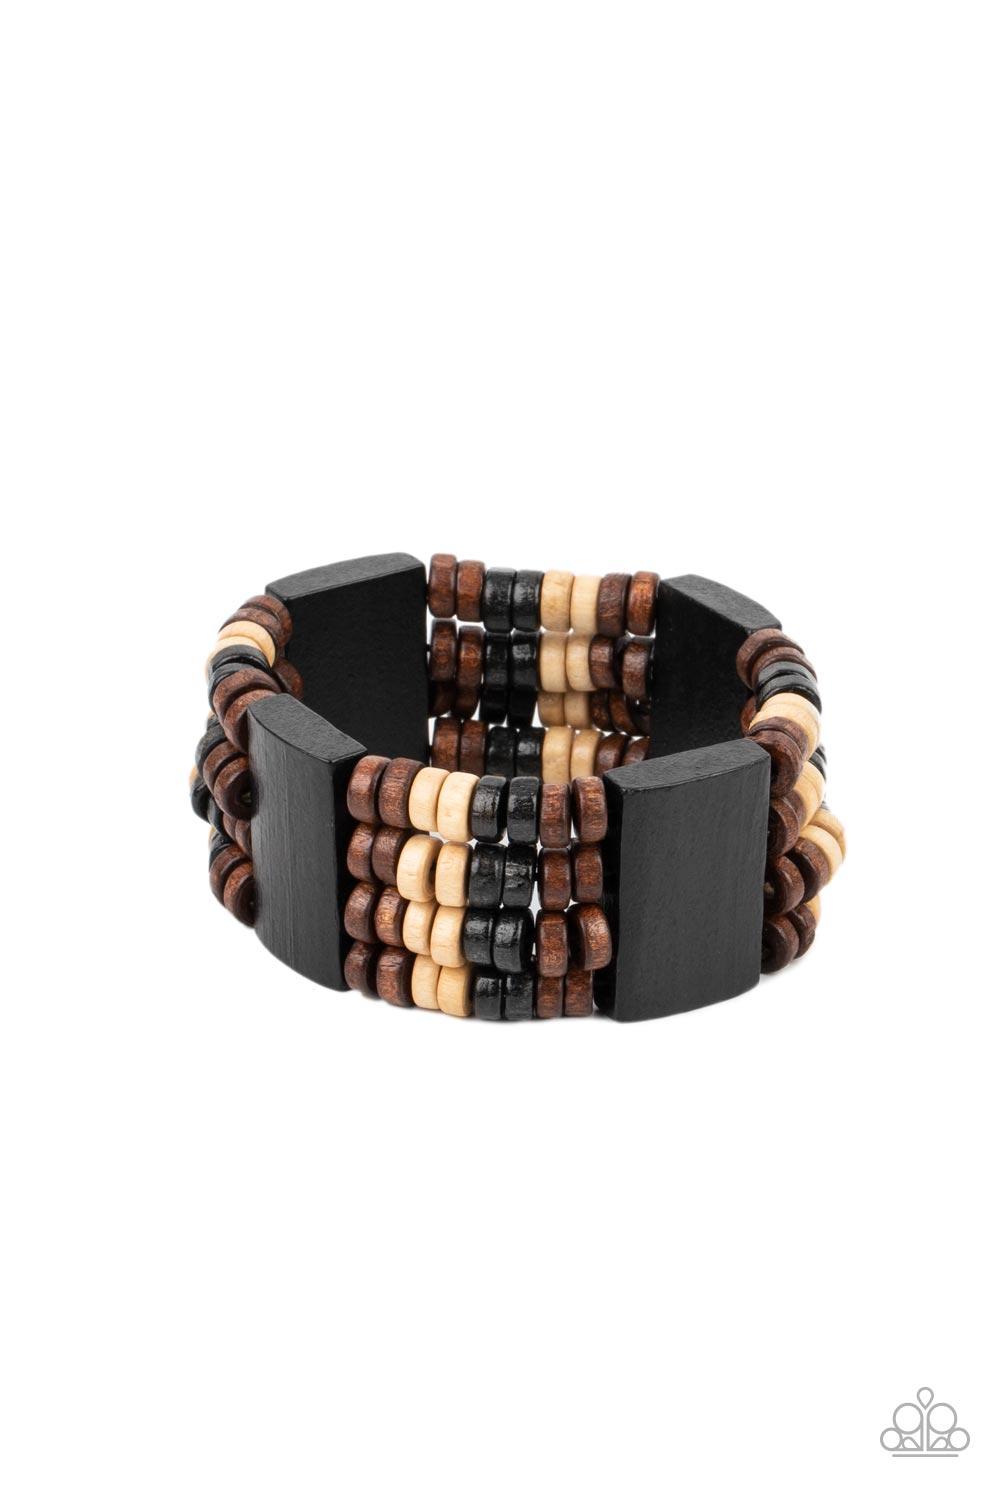 Aruba Attire Black &amp; Brown Wood Bracelet - Paparazzi Accessories- lightbox - CarasShop.com - $5 Jewelry by Cara Jewels